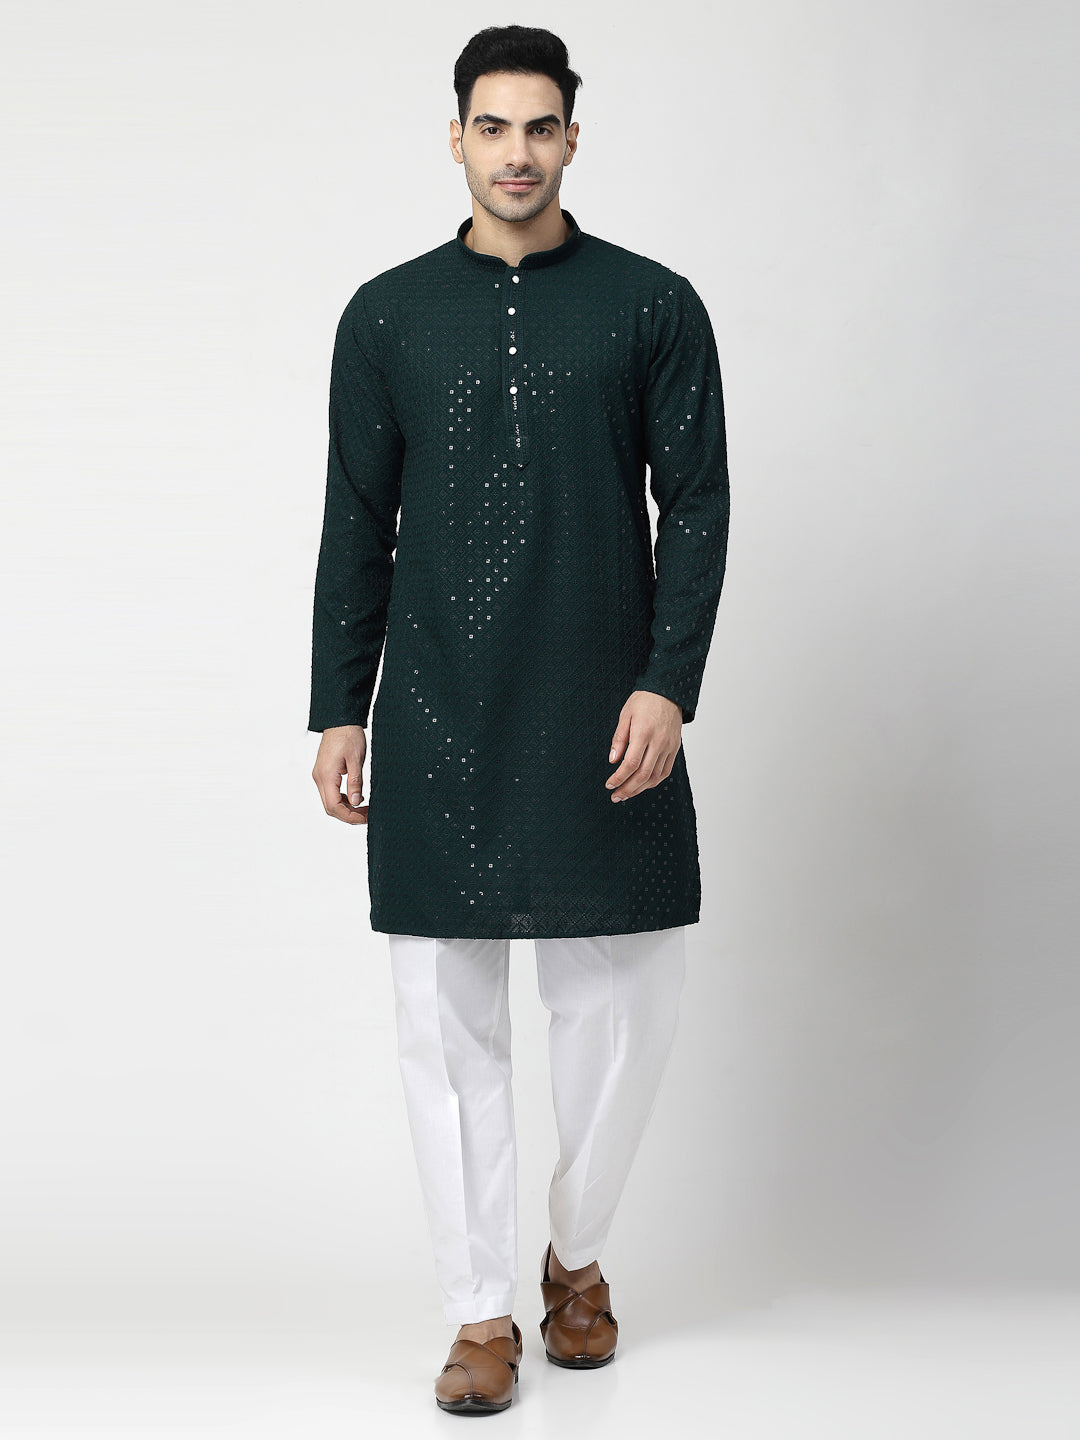 Men's Embroidery Cotton Blend Chikankari Kurta Set with White Pyjama (Black Color)